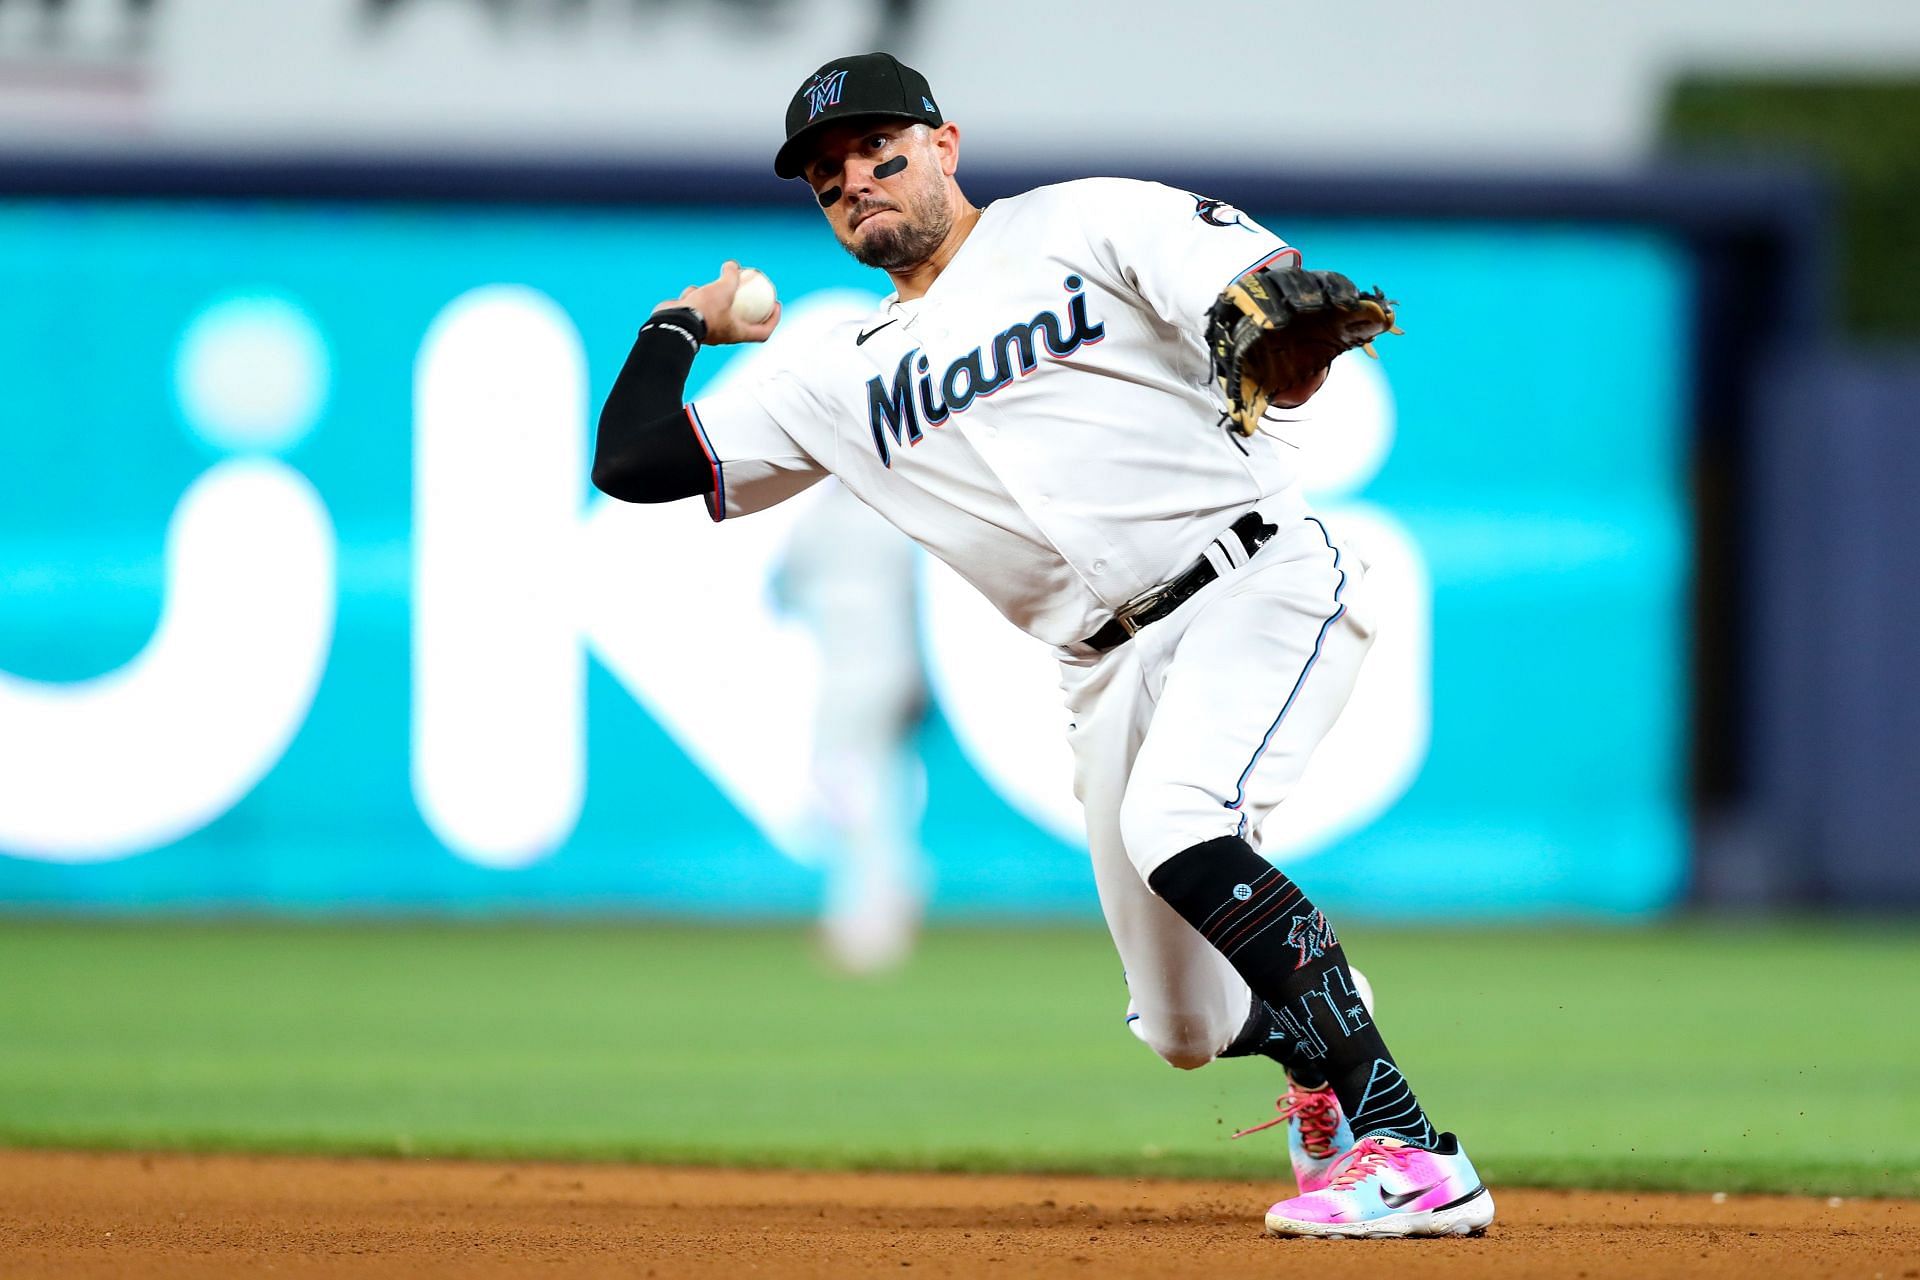 Once a Dodger, again a Dodger: LA acquires infielder Miguel Rojas